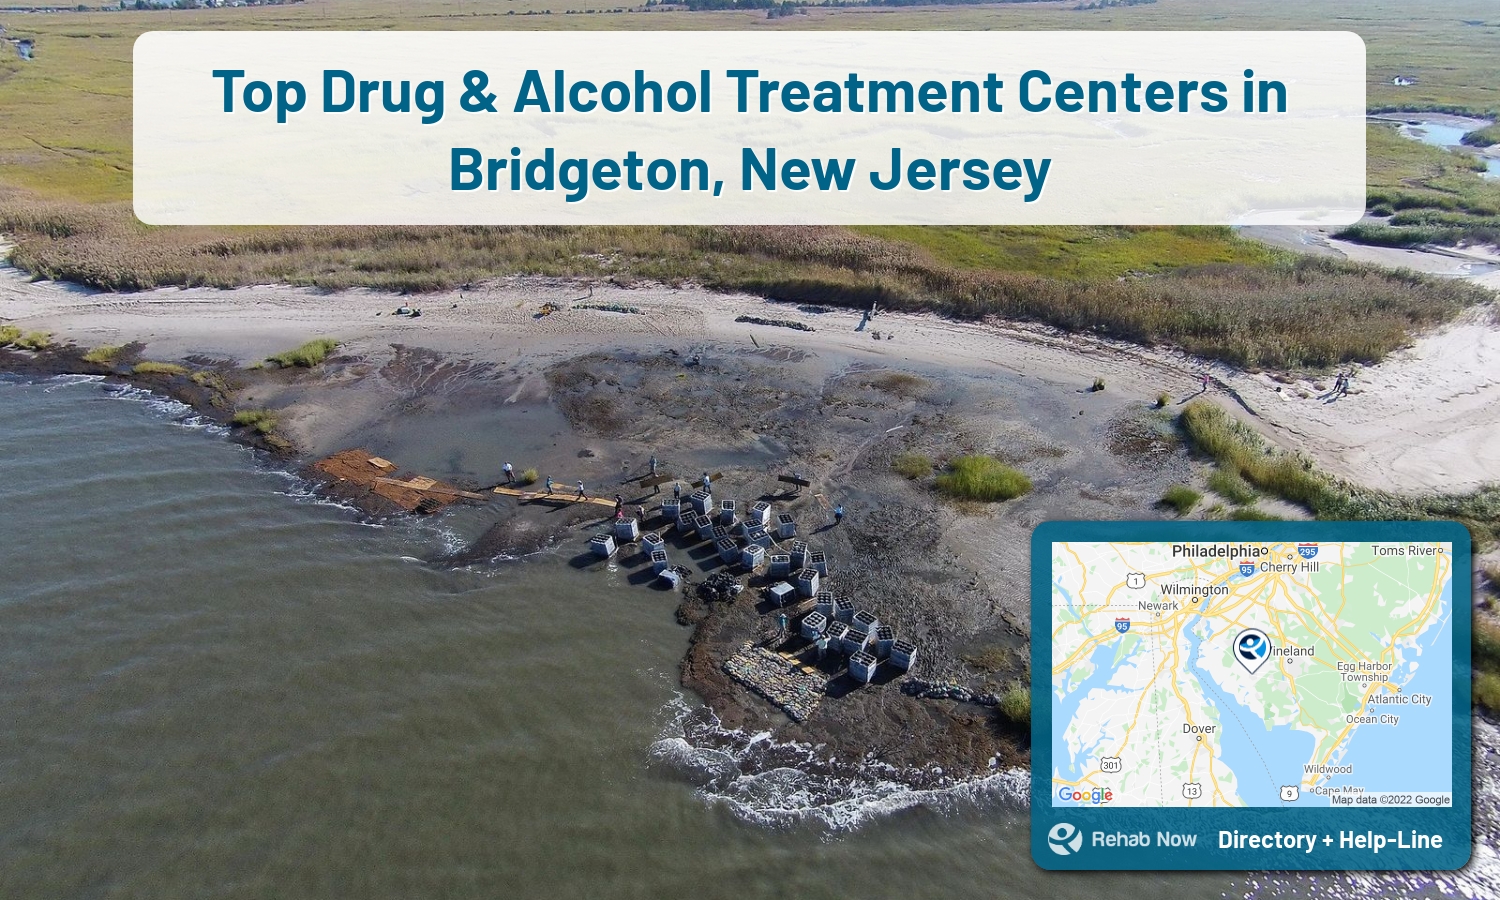 Bridgeton, NJ Treatment Centers. Find drug rehab in Bridgeton, New Jersey, or detox and treatment programs. Get the right help now!